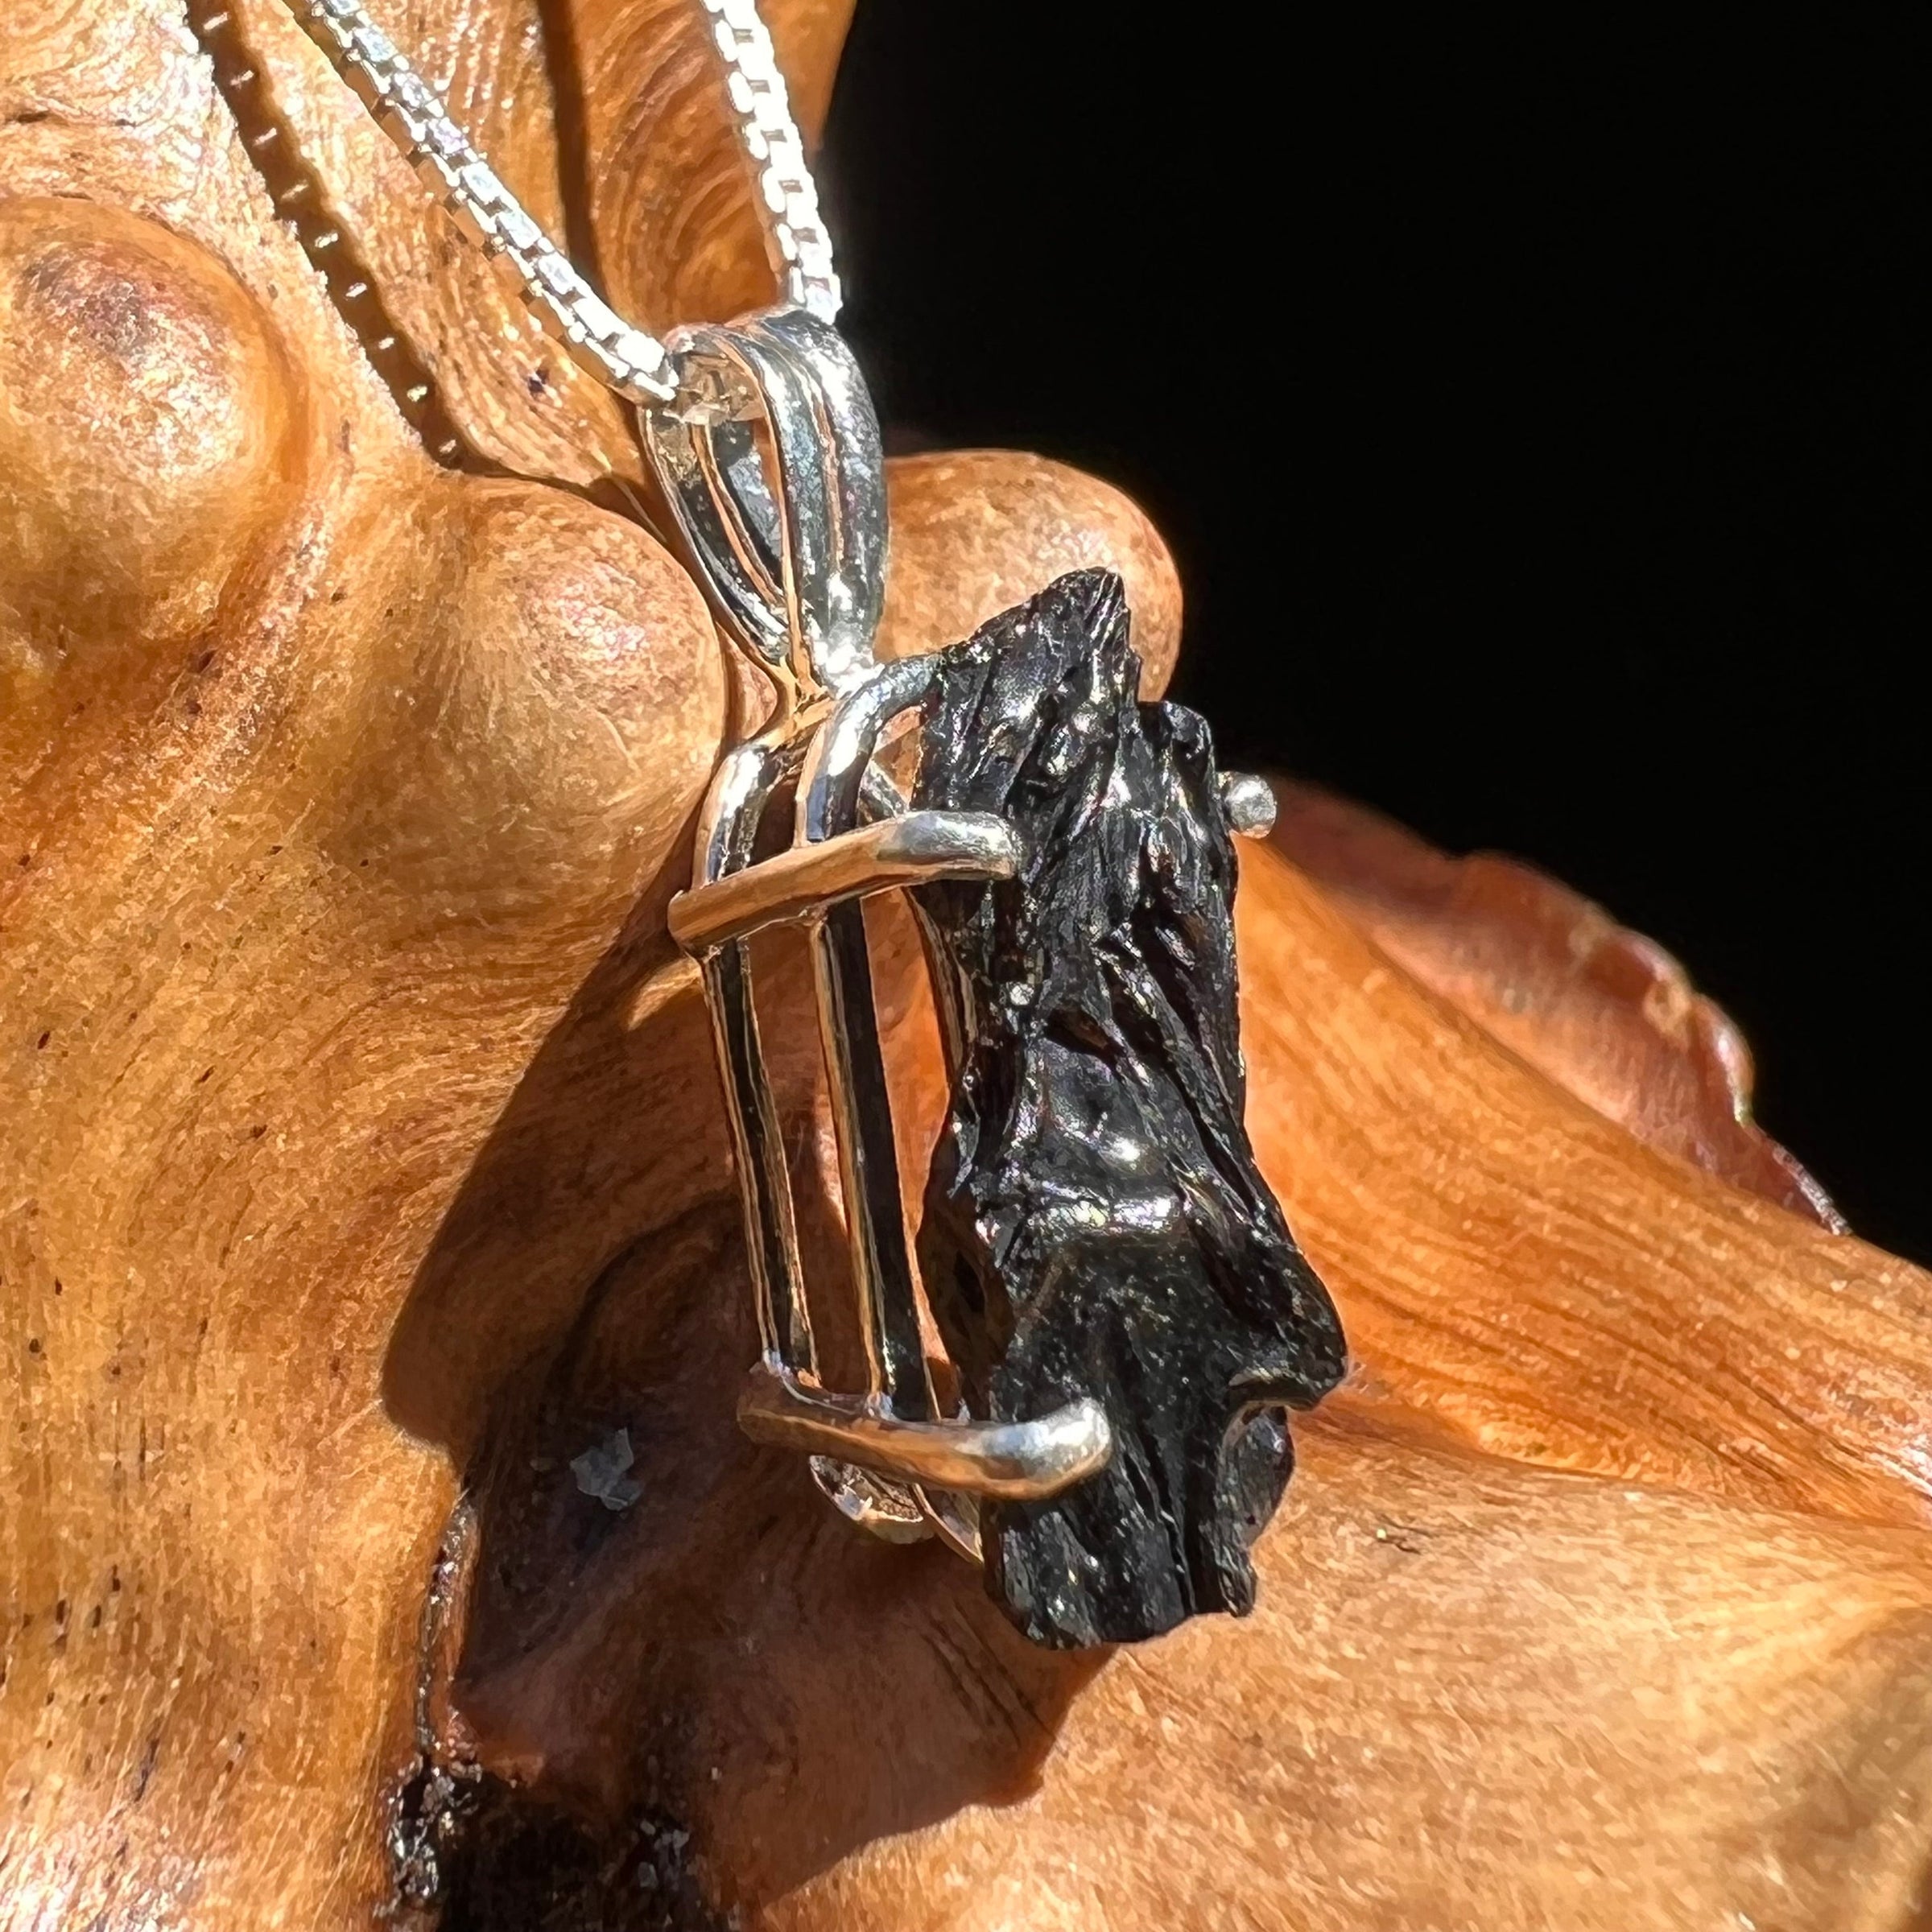 Irgizite Tektite Pendant Necklace Sterling Silver #2533-Moldavite Life